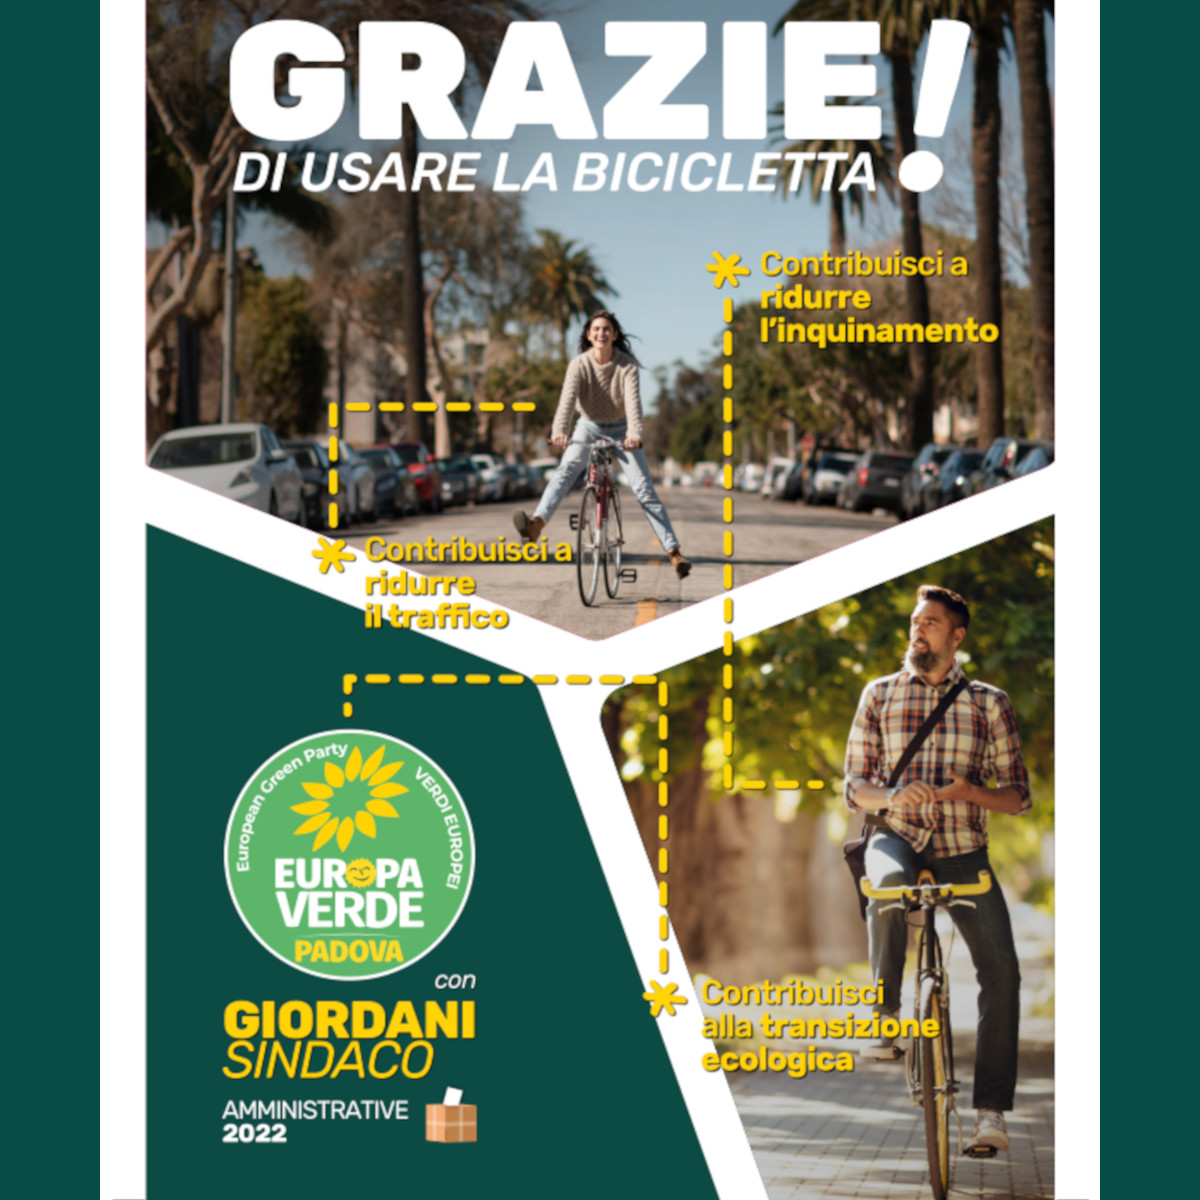 Proposte-Europa-Verde.-Padova-bici